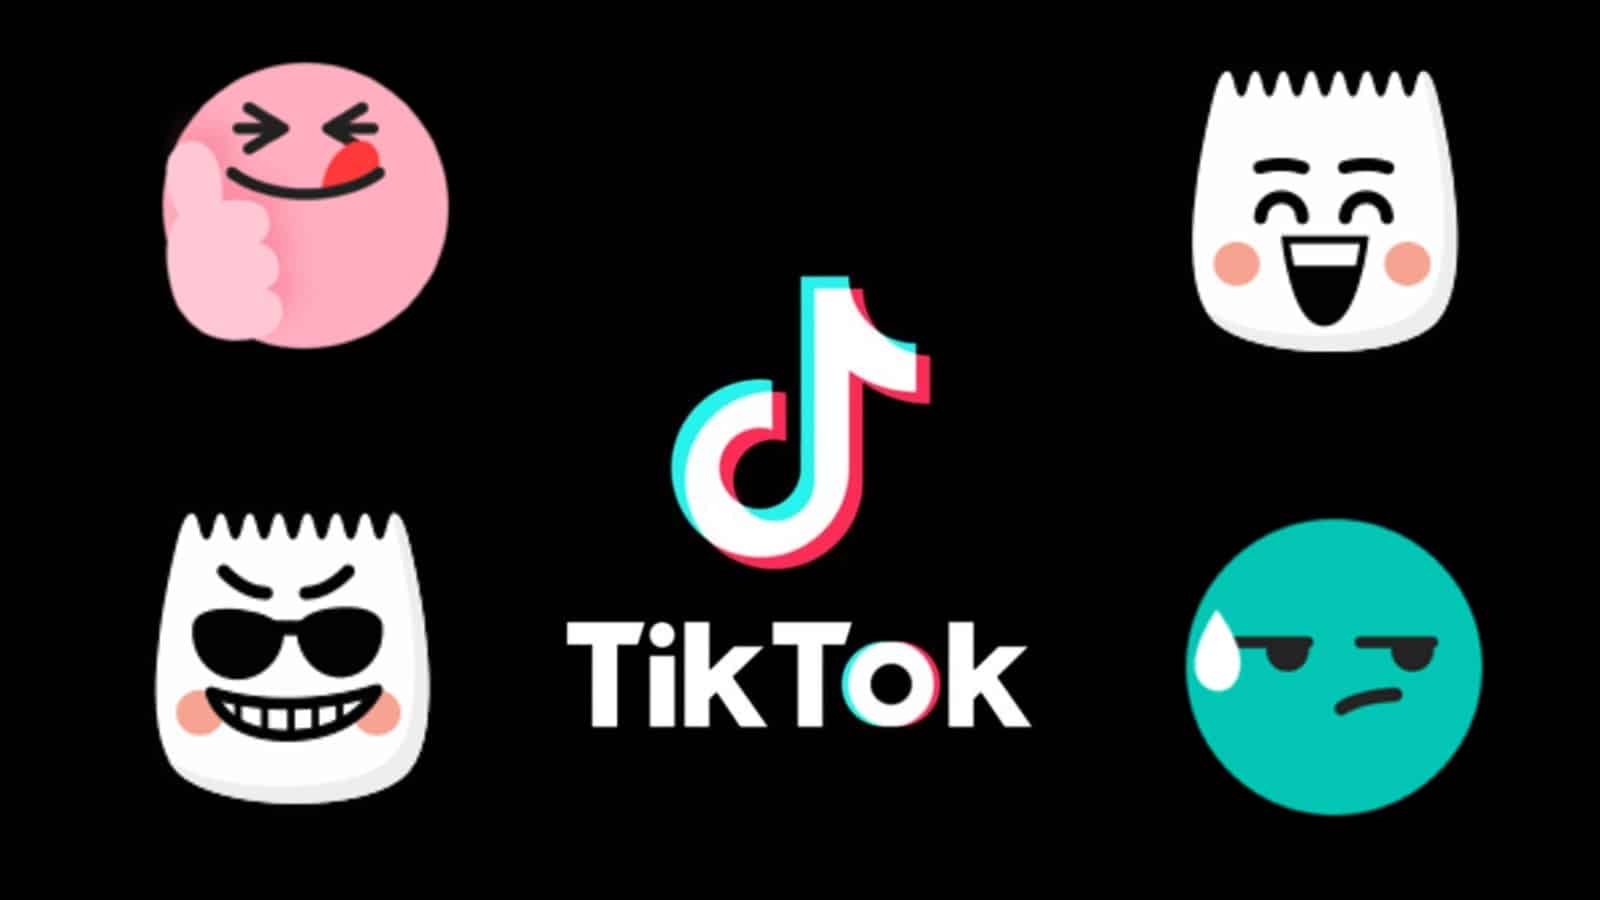 The TikTok logo with secret emojis